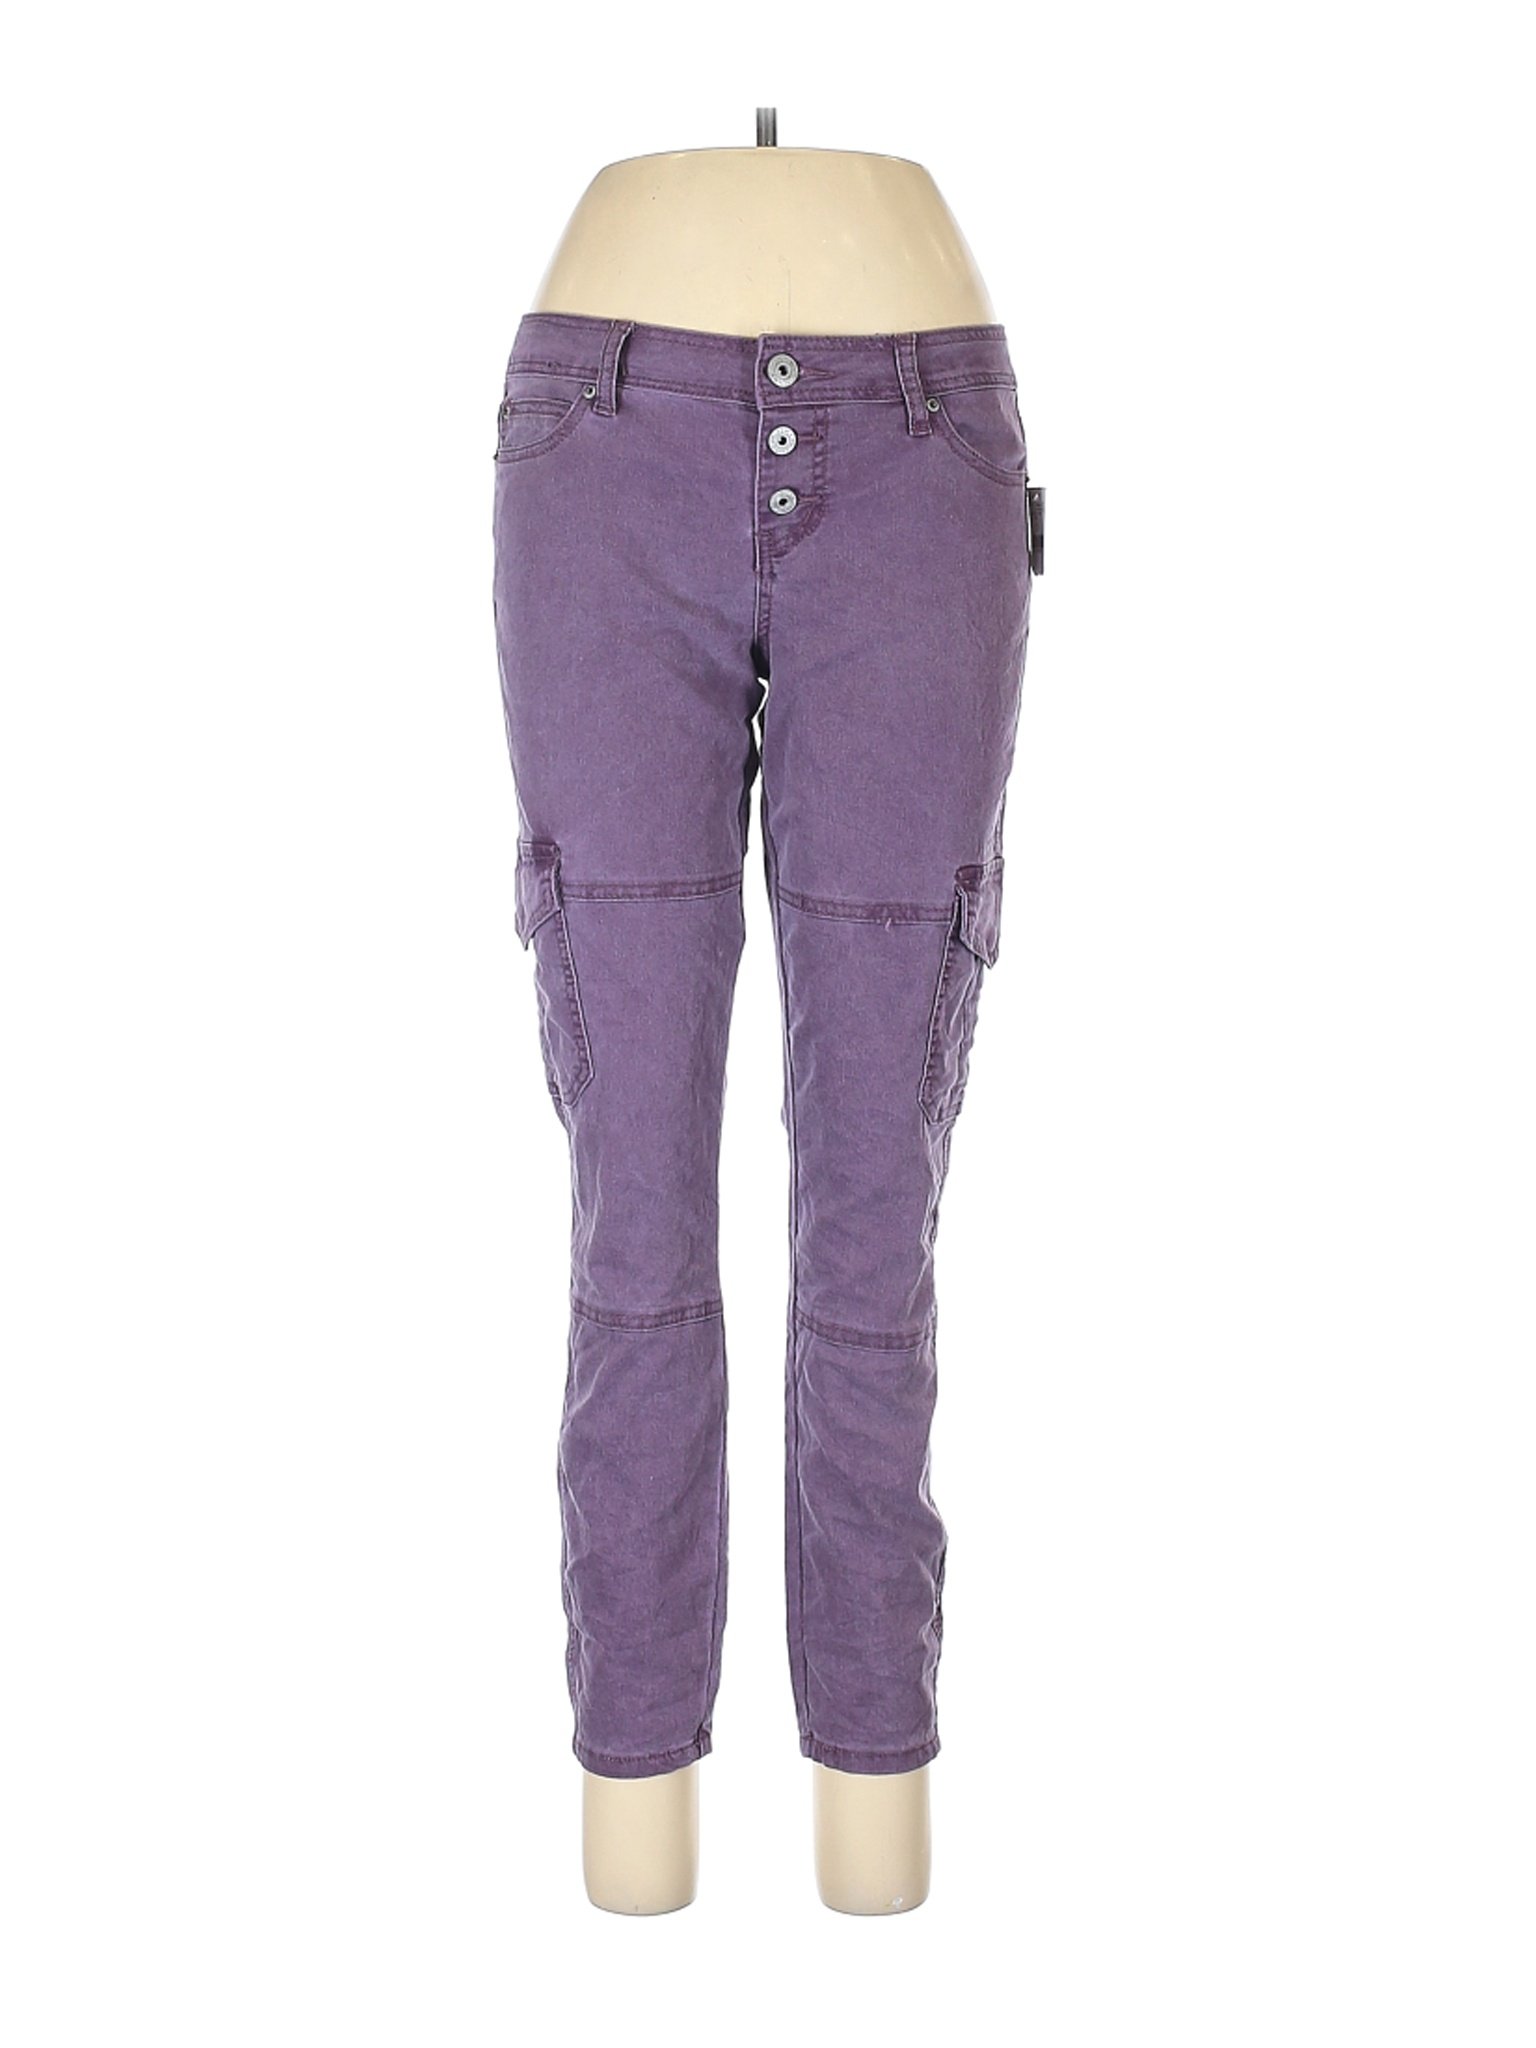 NWT Vanilla Star Women Purple Cargo Pants 11 | eBay